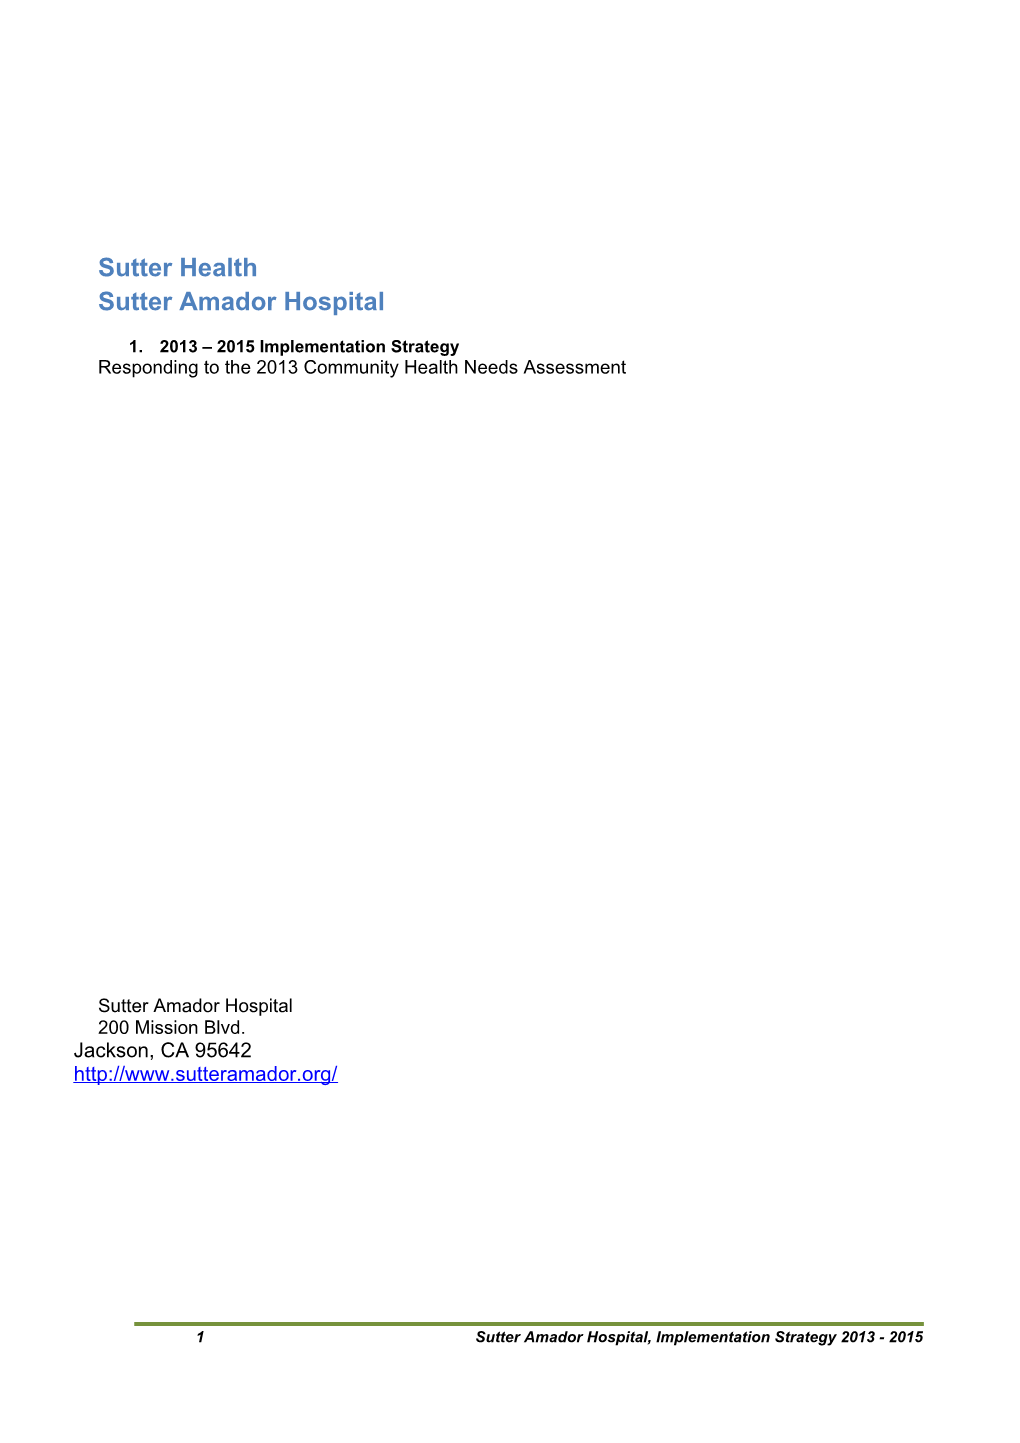 Sutter Health Sutter Amador Hospital 2013-2015 Implementation Strategy